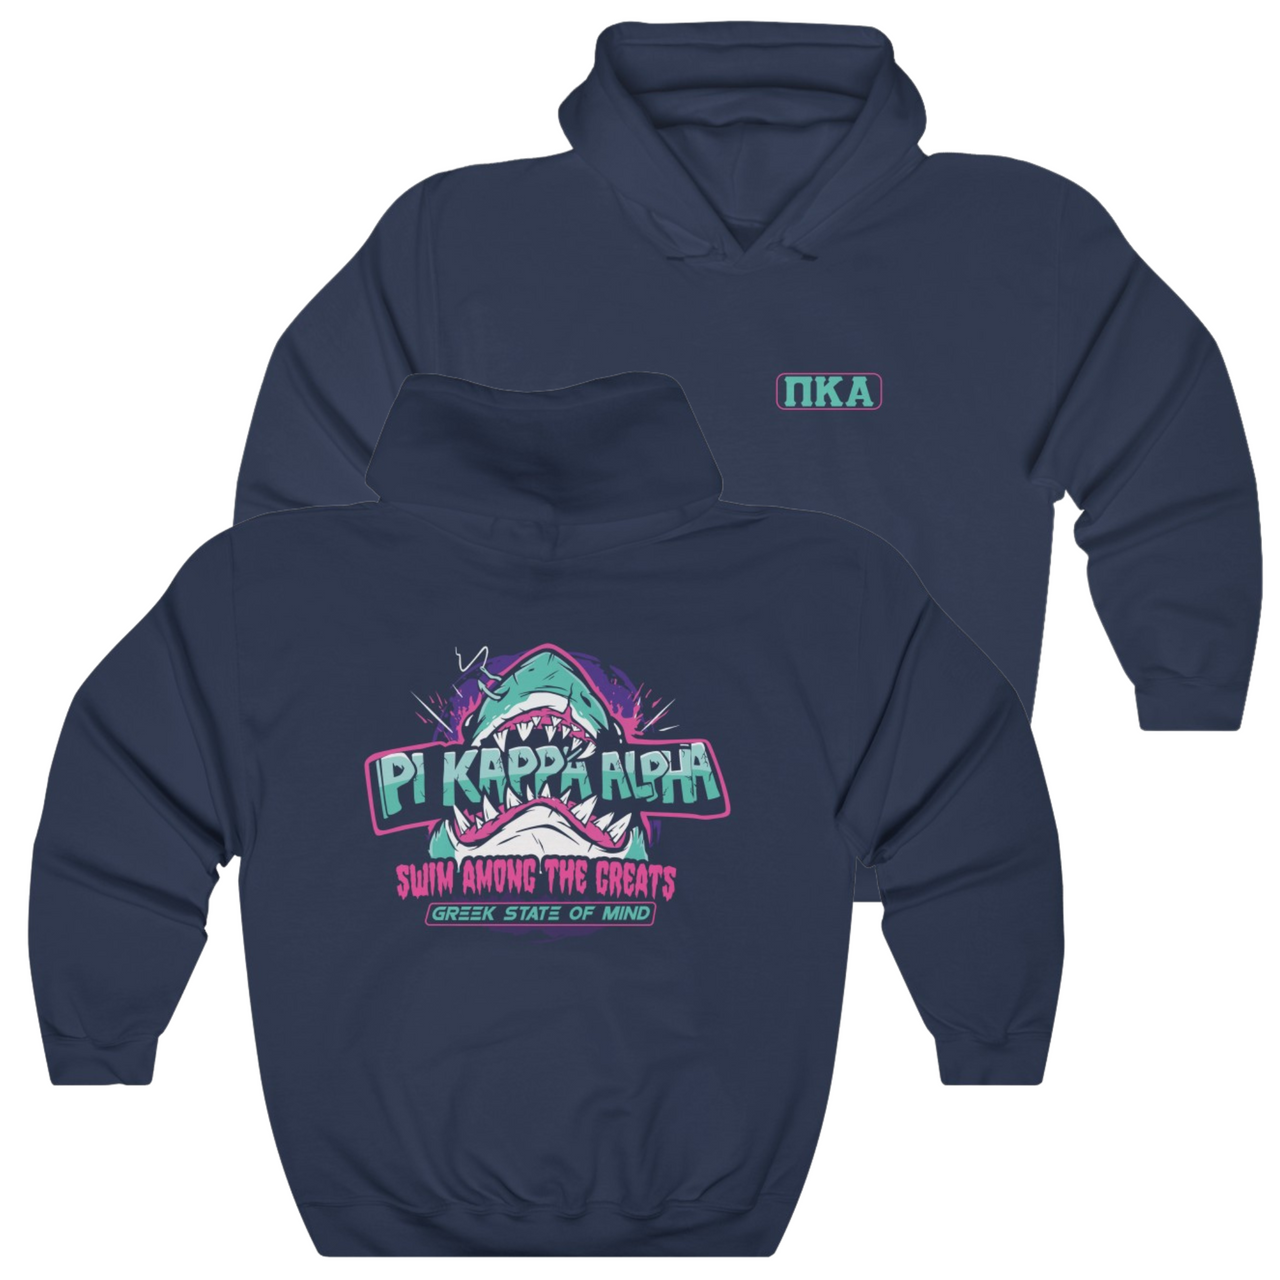 Navy Pi Kappa Alpha Graphic Hoodie | The Deep End | Pi kappa alpha fraternity shirt 